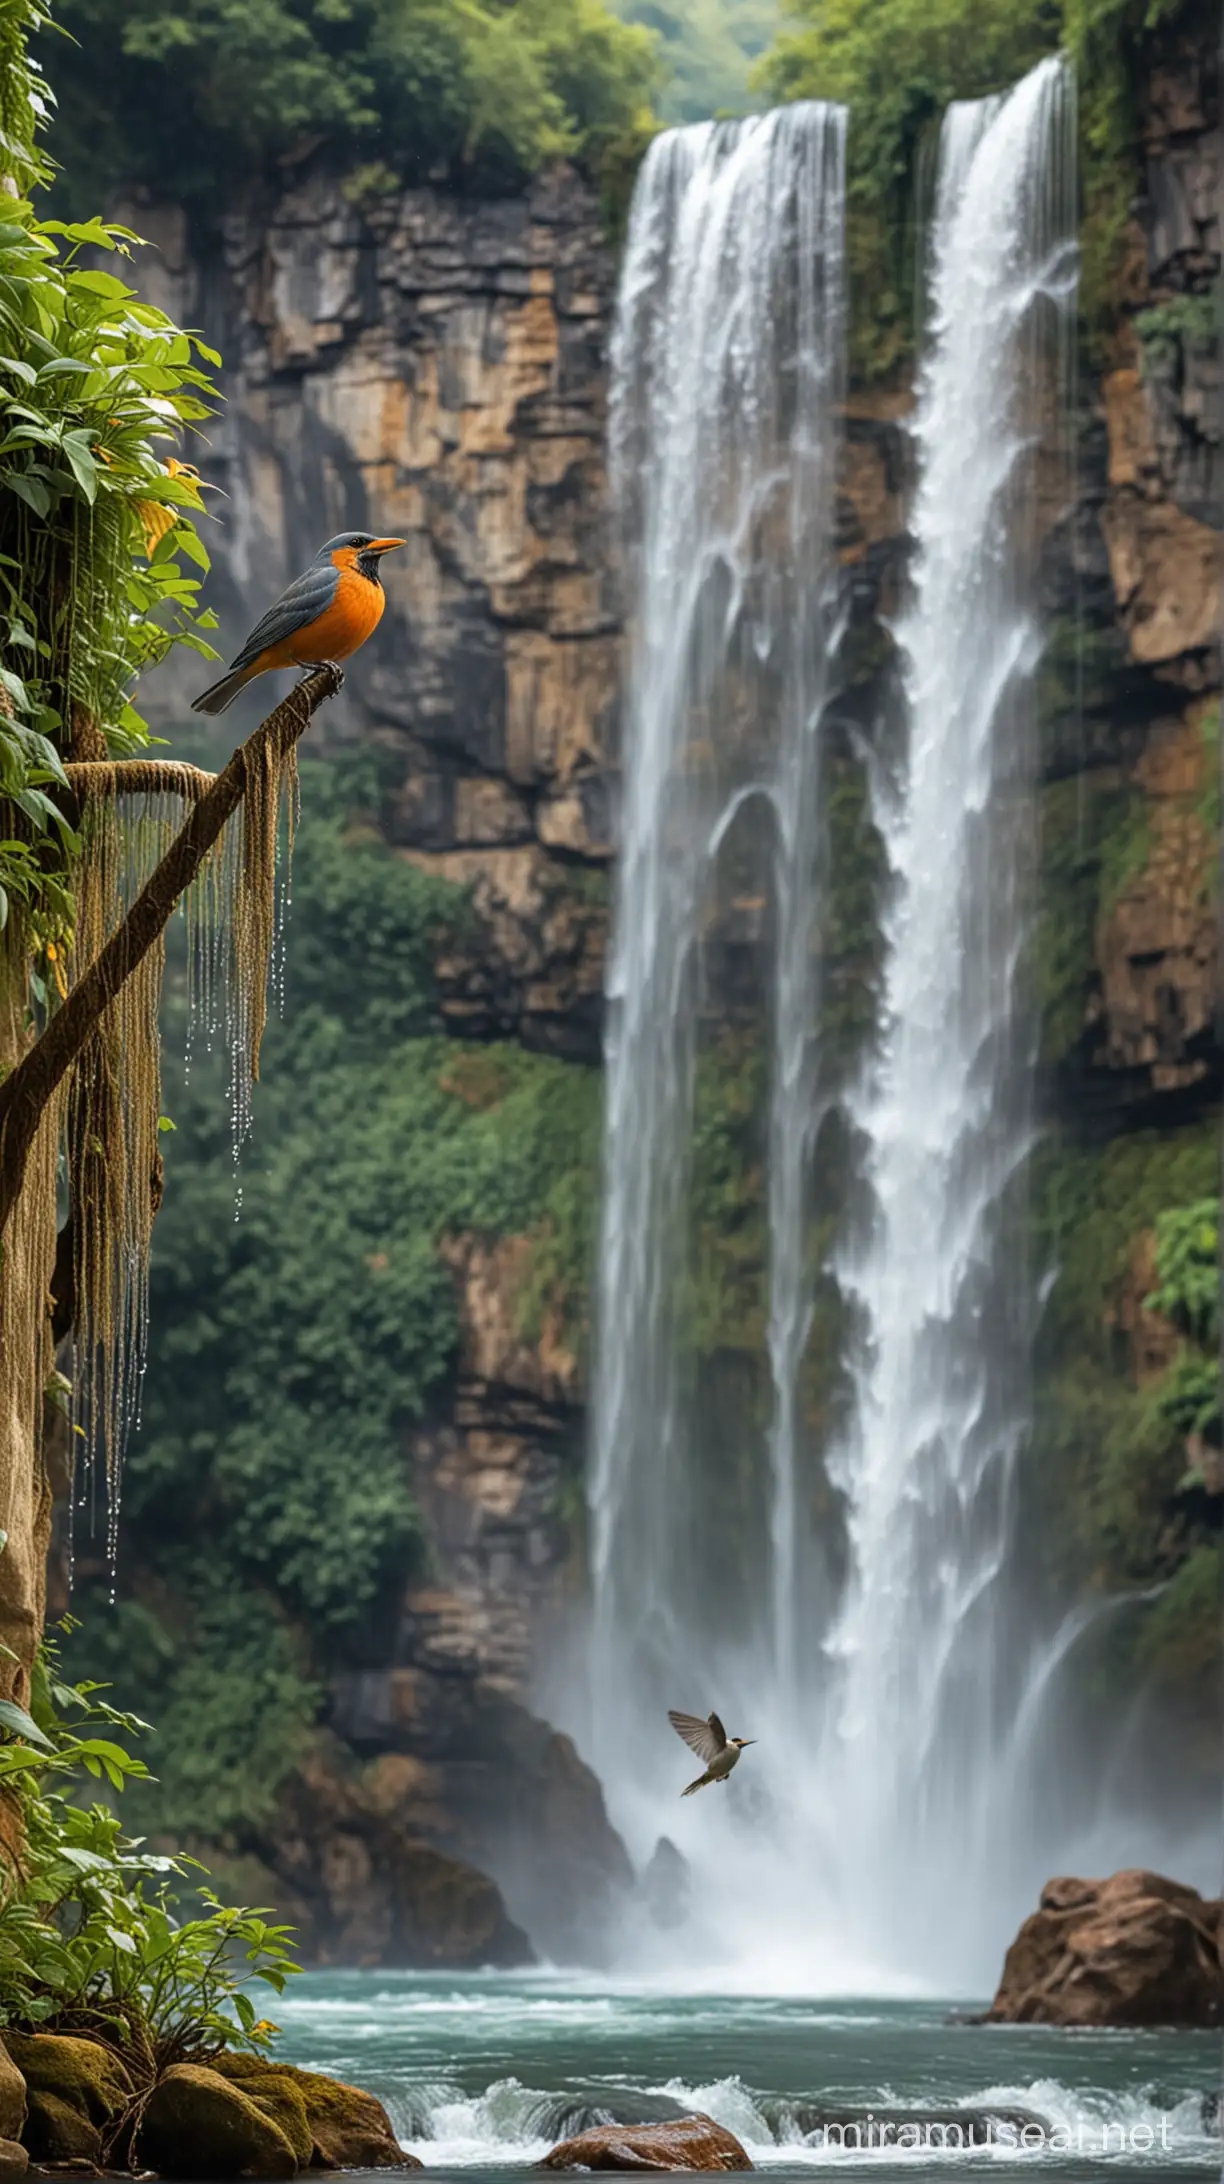 Singing Bird Amidst Majestic Waterfall Scenery